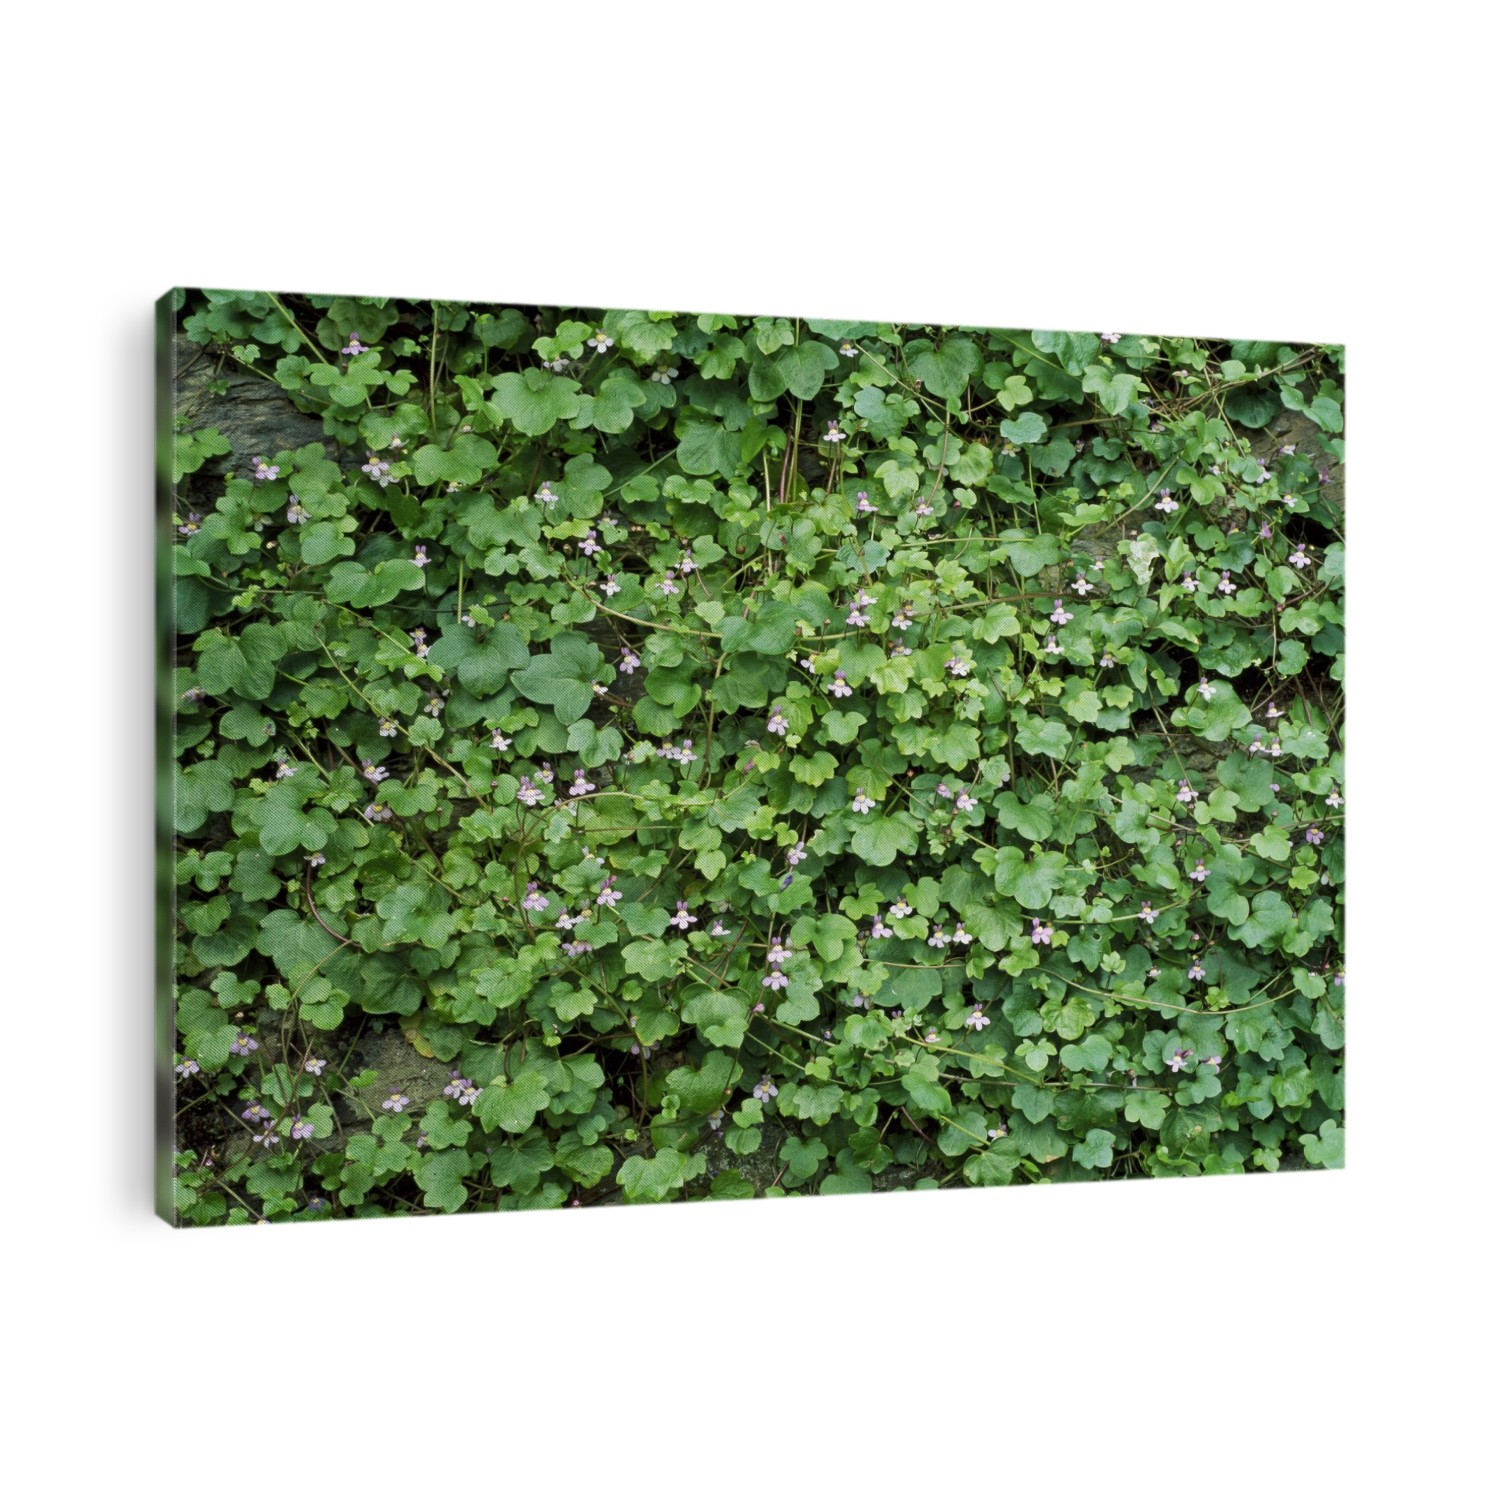 Ivy-leaved toadflax (Cymbalaria muralis).